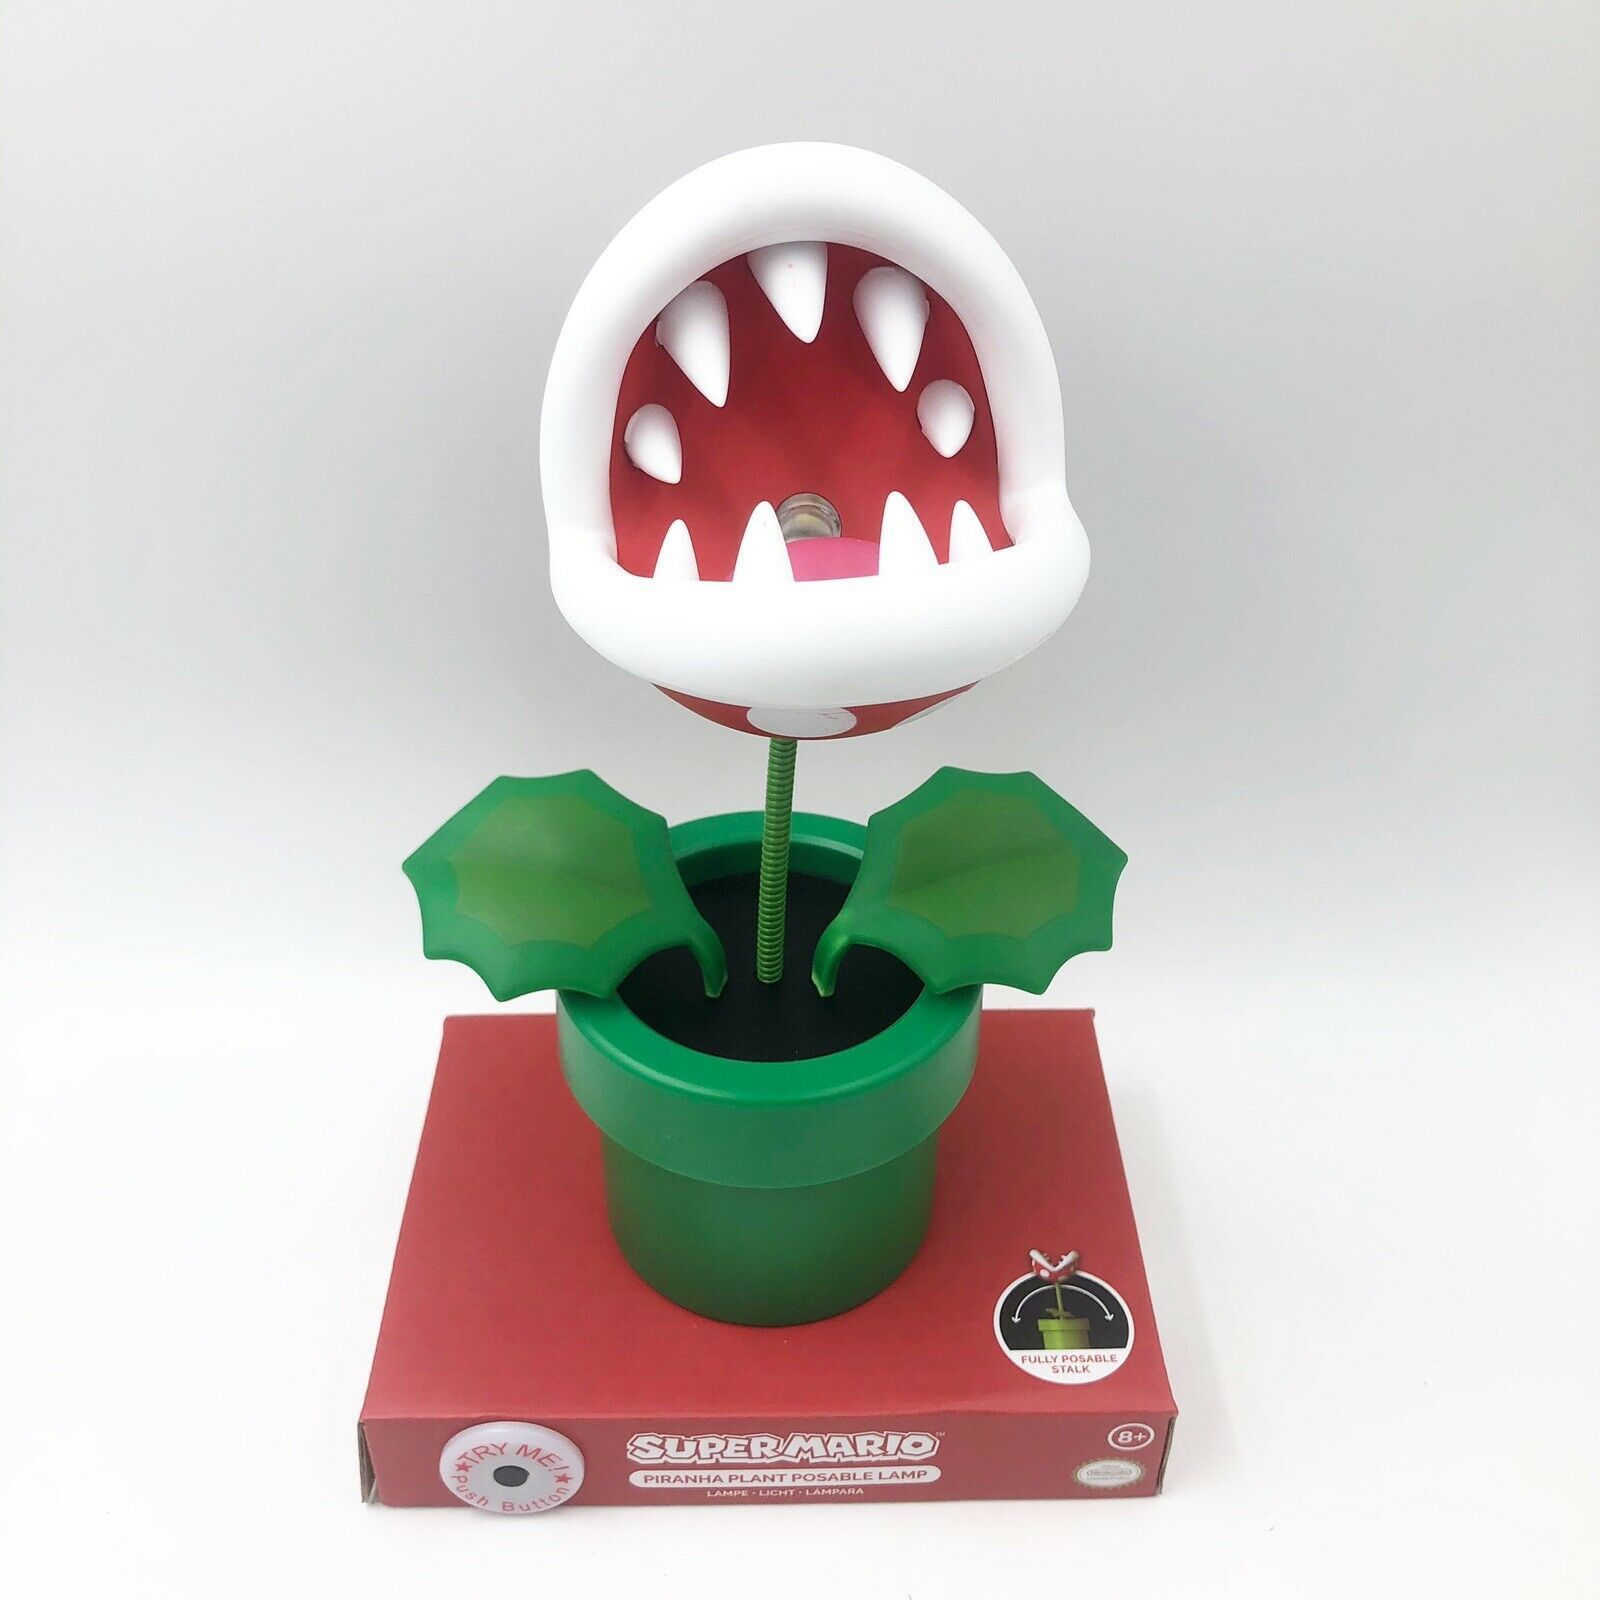 Super Mario Paladone Nintendo Piranha Plant Posable LED kid's desk lamp light